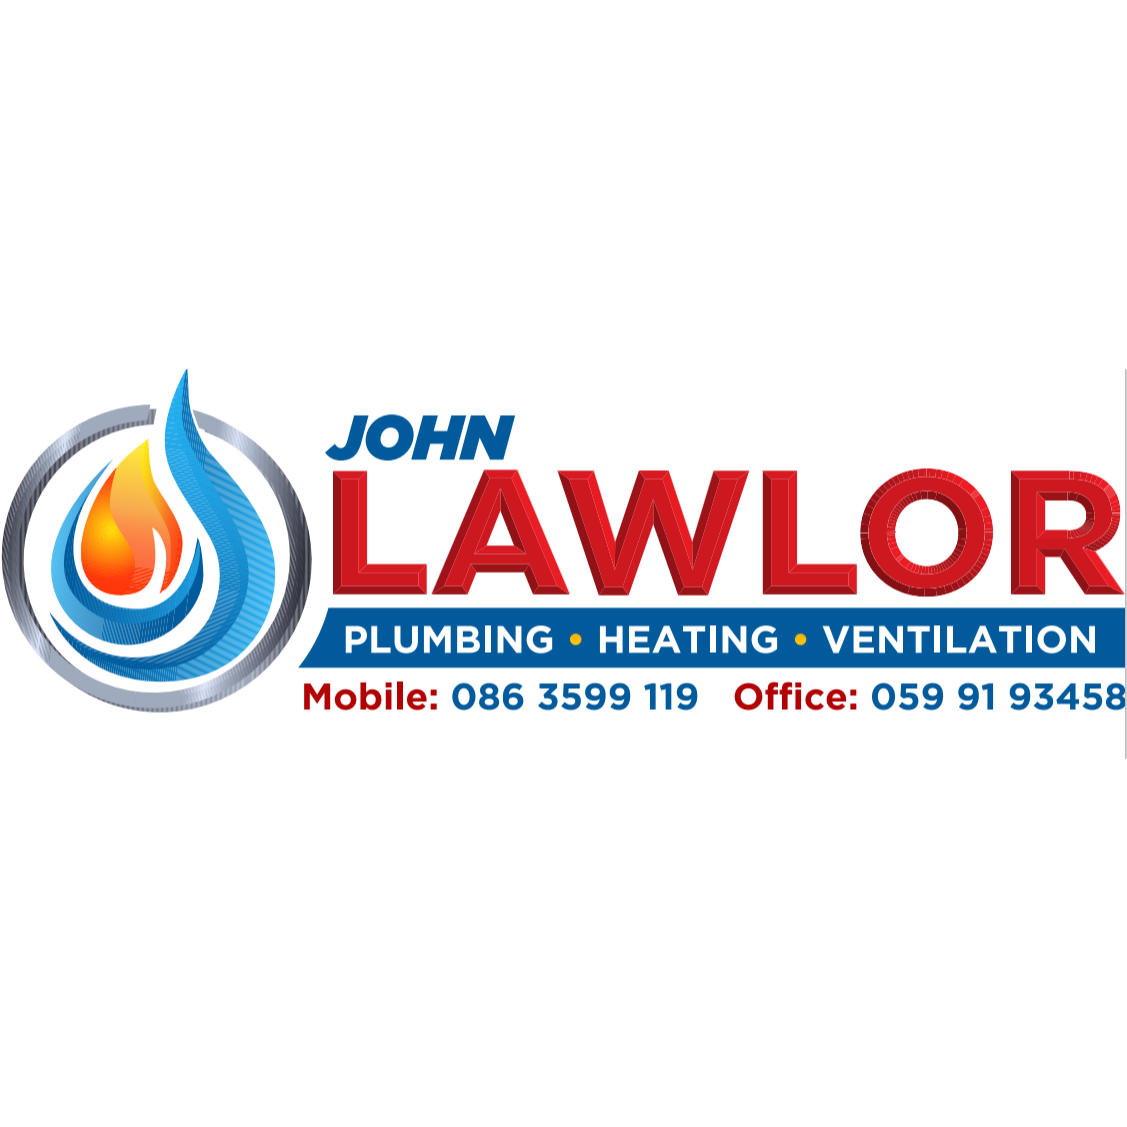 John Lawlor Plumbing and Heating Ltd